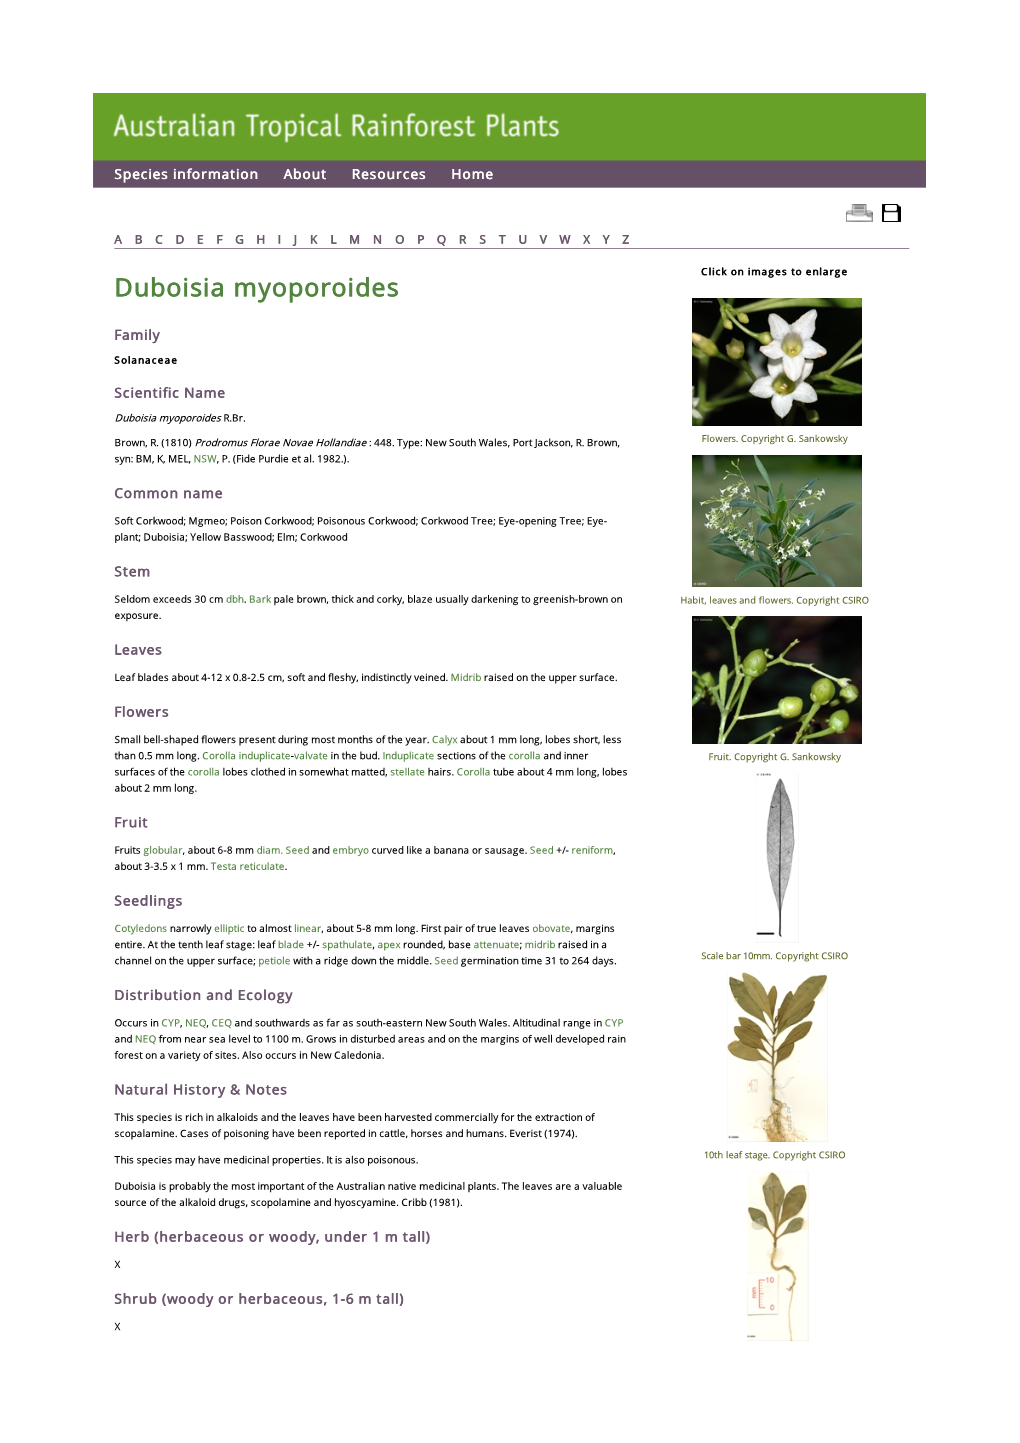 Duboisia Myoporoides Click on Images to Enlarge